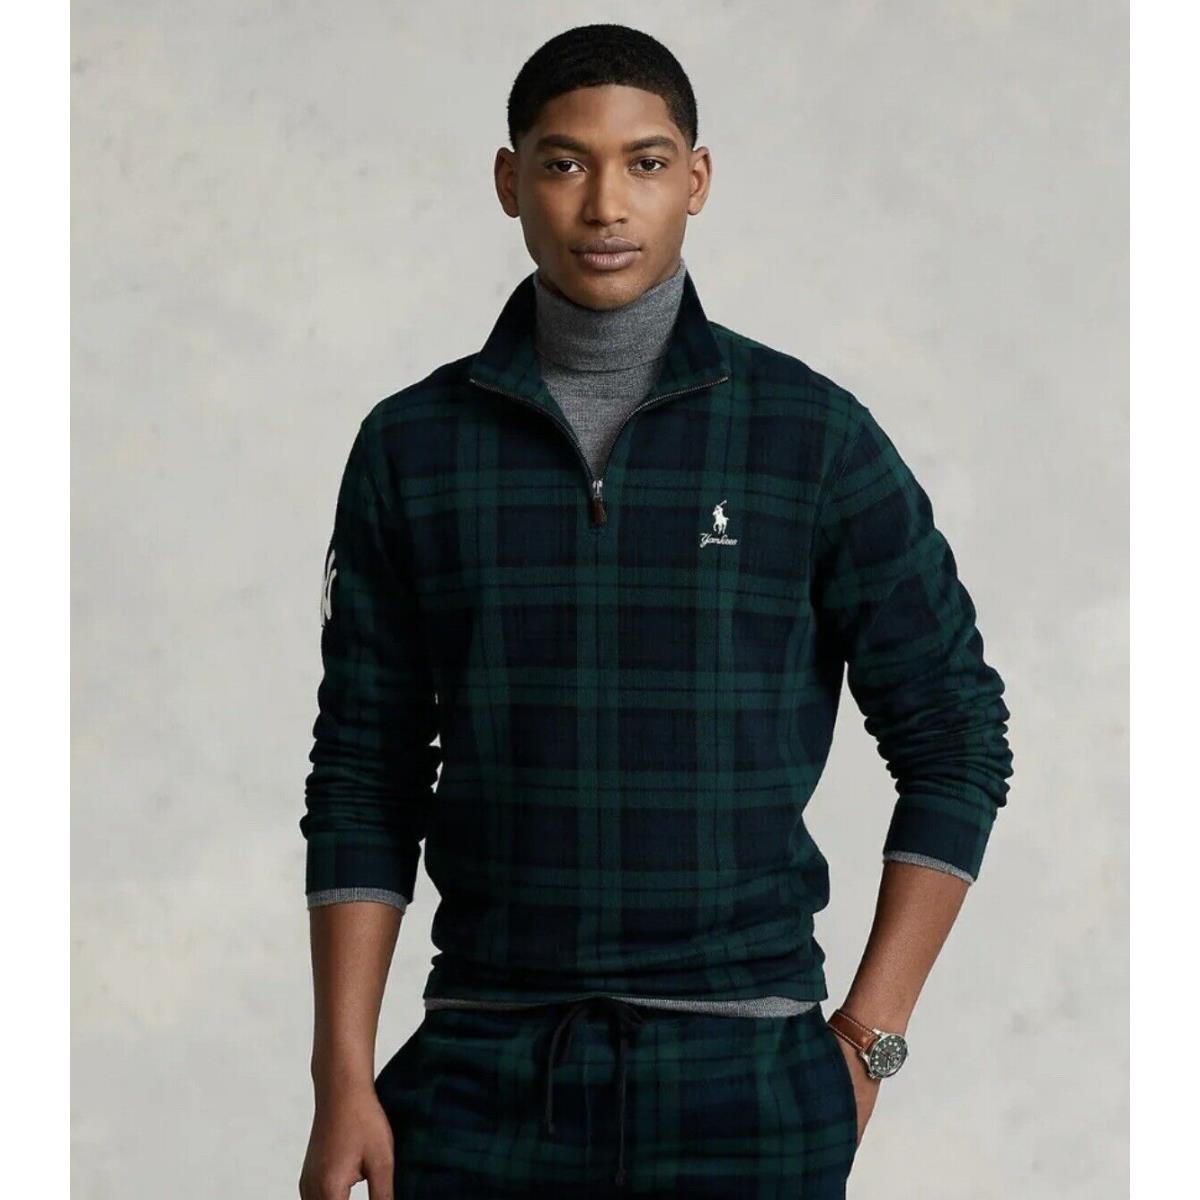 Polo Ralph Lauren NY Yankees Mlb Quarter Zip Plaid Blackwatch Sweater Medium